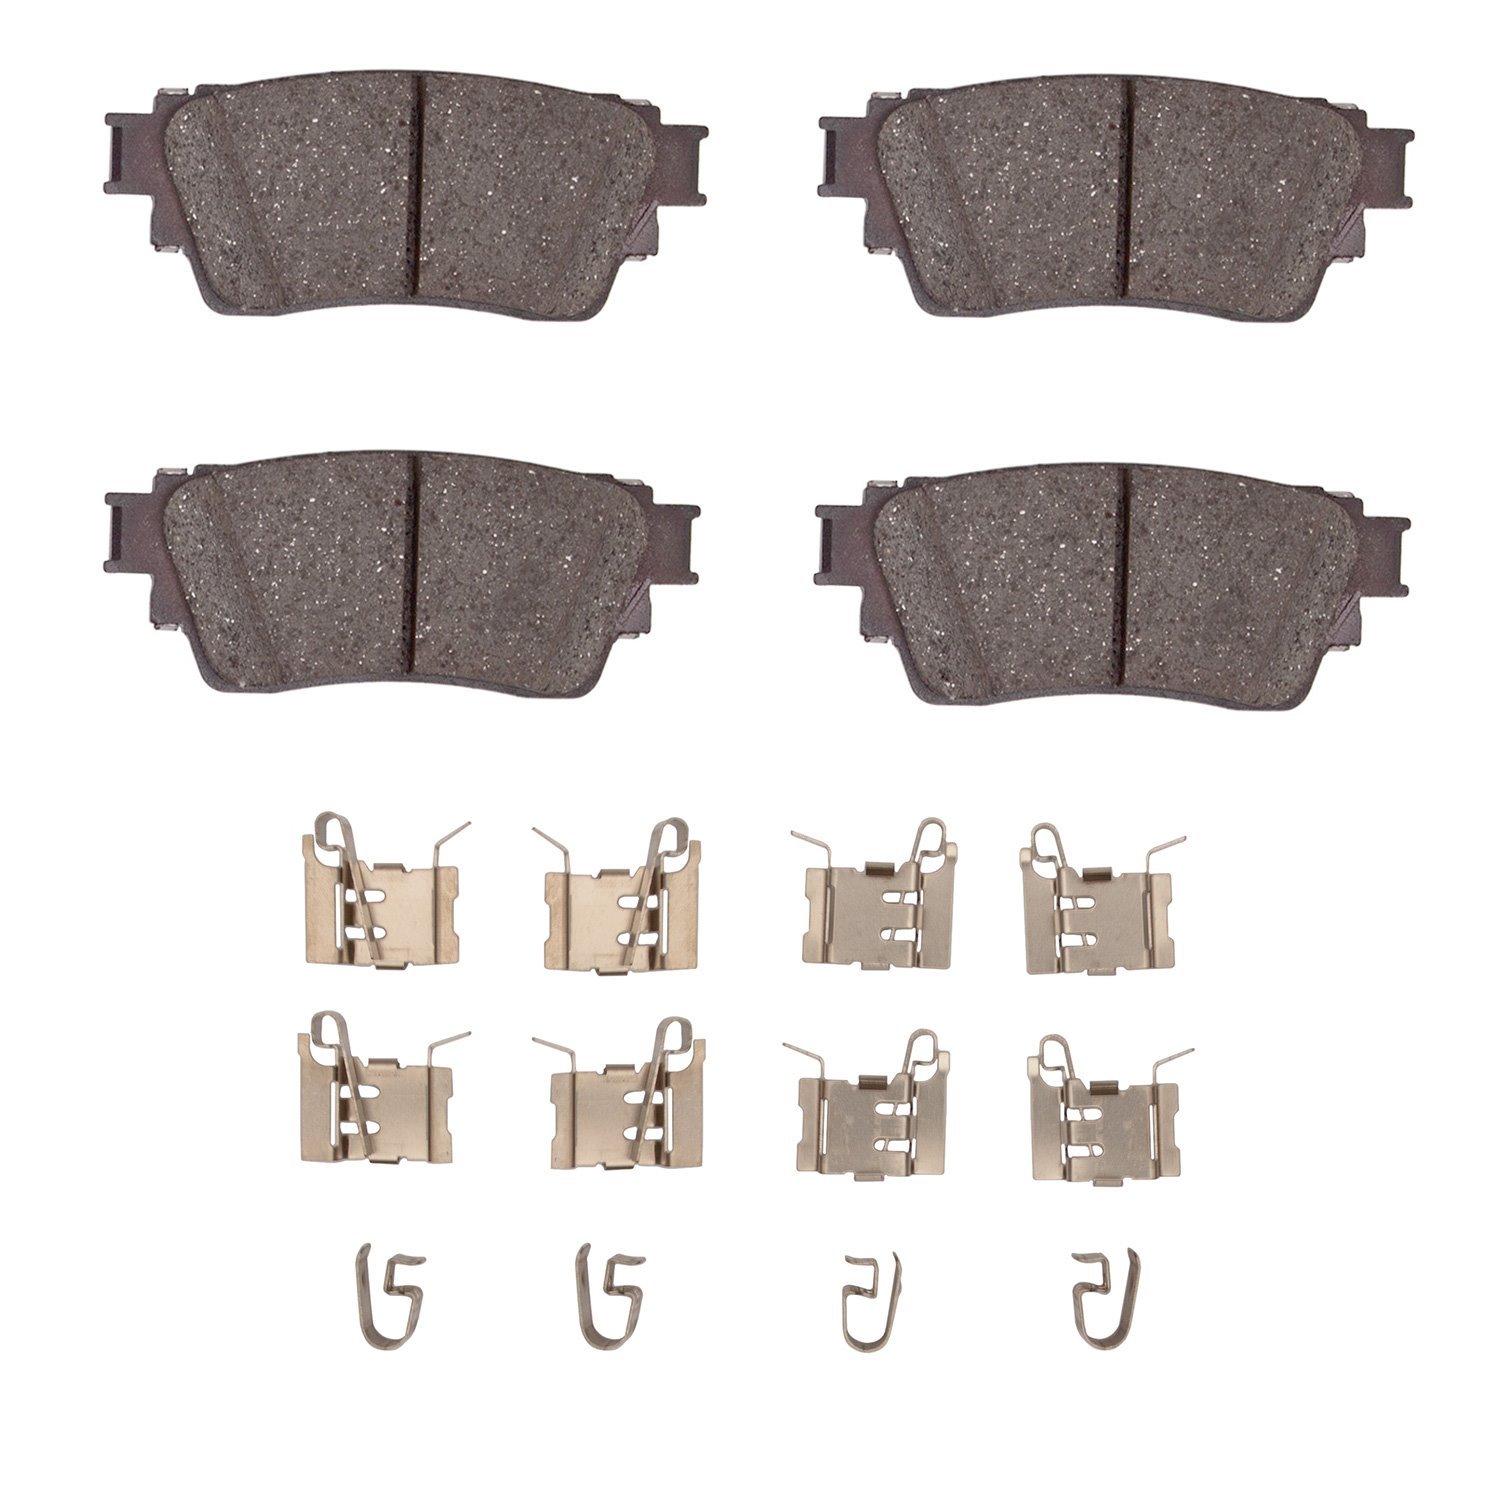 1310-2200-02 3000-Series Ceramic Brake Pads & Hardware Kit, Fits Select Multiple Makes/Models, Position: Rear